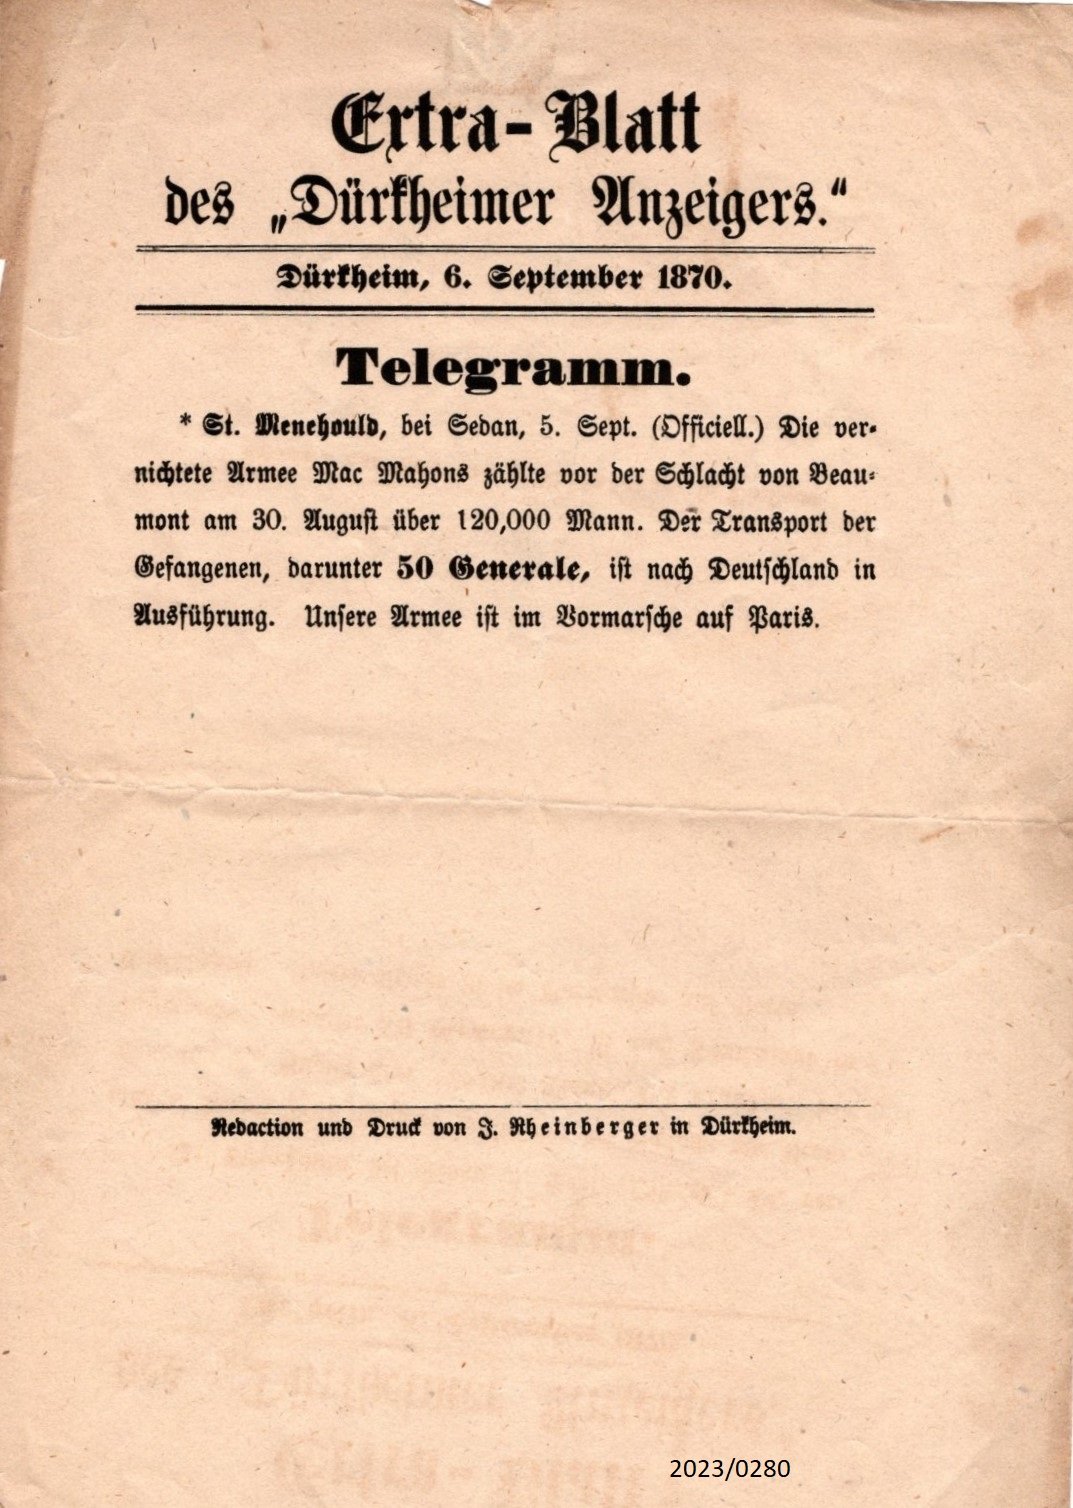 Extra-Blatt des "Dürkheimer Anzeigers", 6.9.1870 (Stadtmuseum Bad Dürkheim im Kulturzentrum Haus Catoir CC BY-NC-SA)